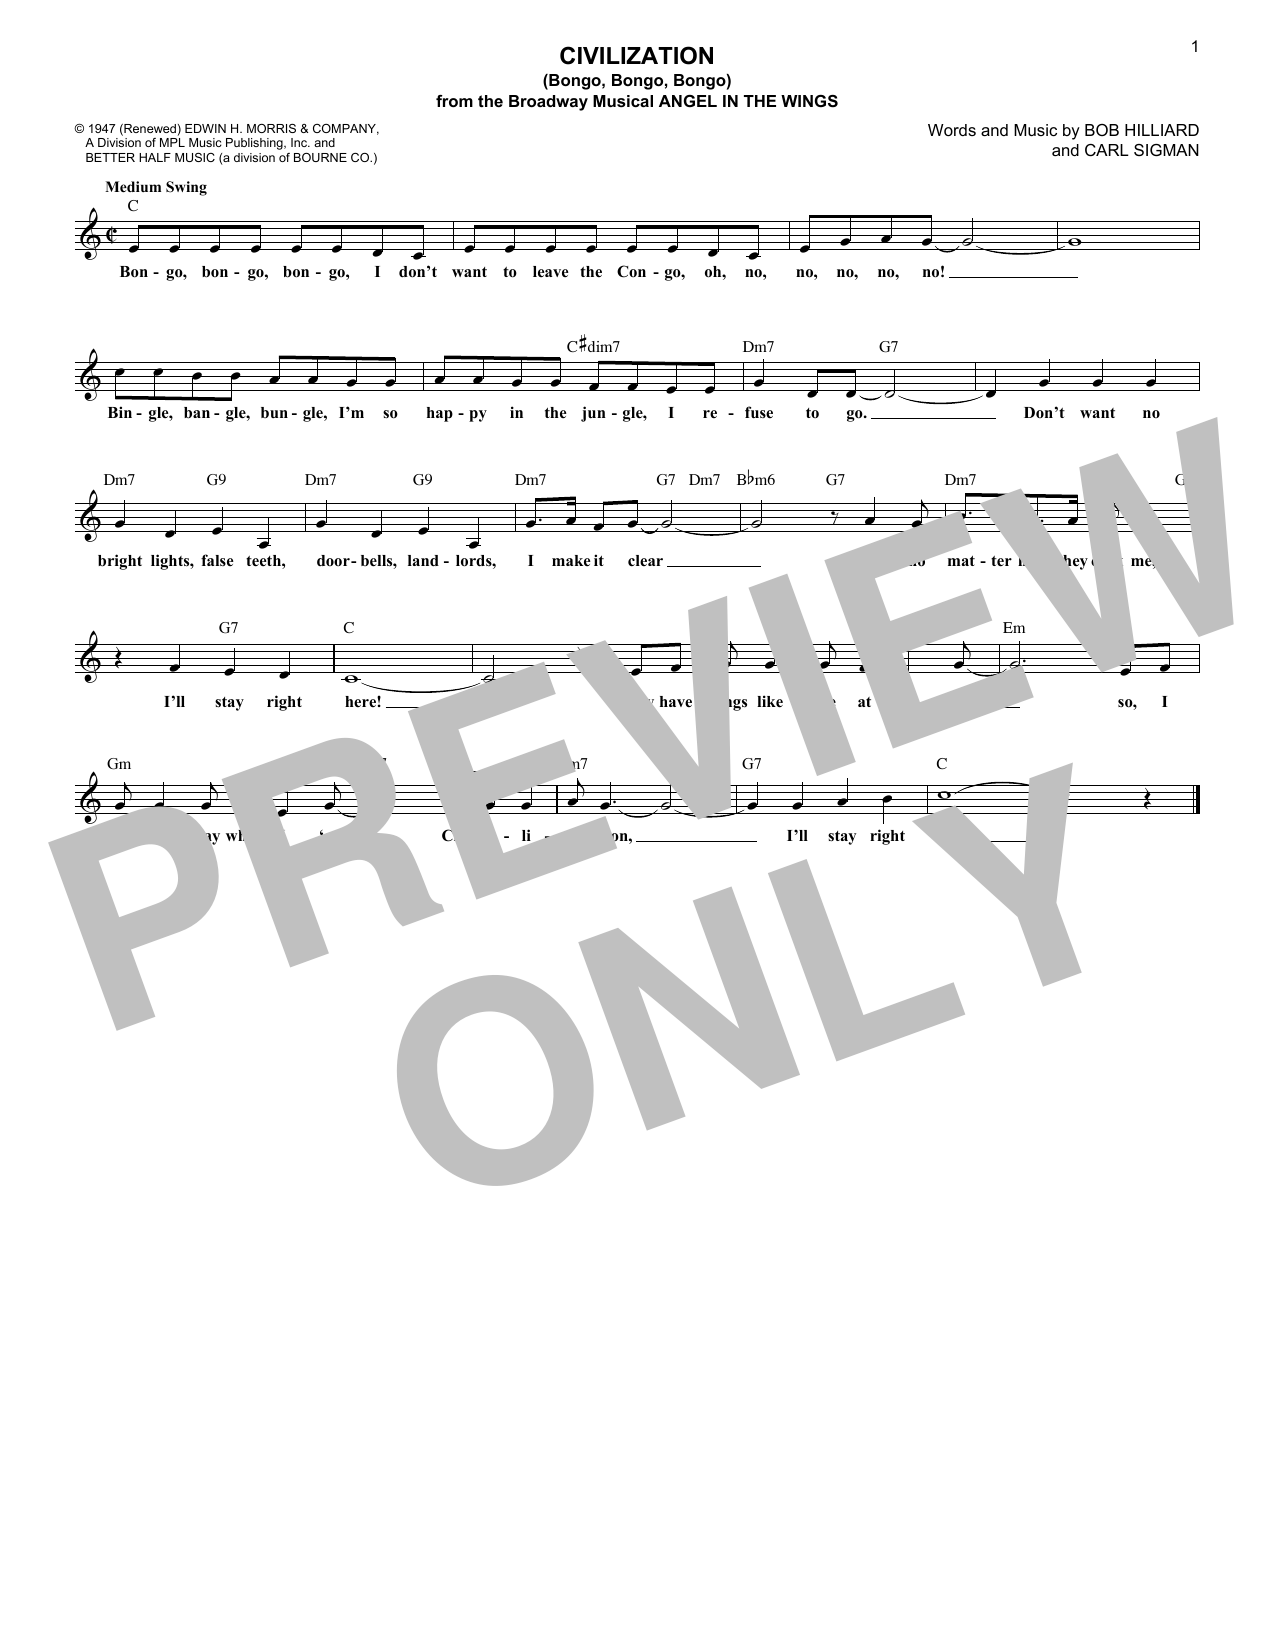 Download Bob Hilliard Civilization (Bongo, Bongo, Bongo) Sheet Music and learn how to play Melody Line, Lyrics & Chords PDF digital score in minutes